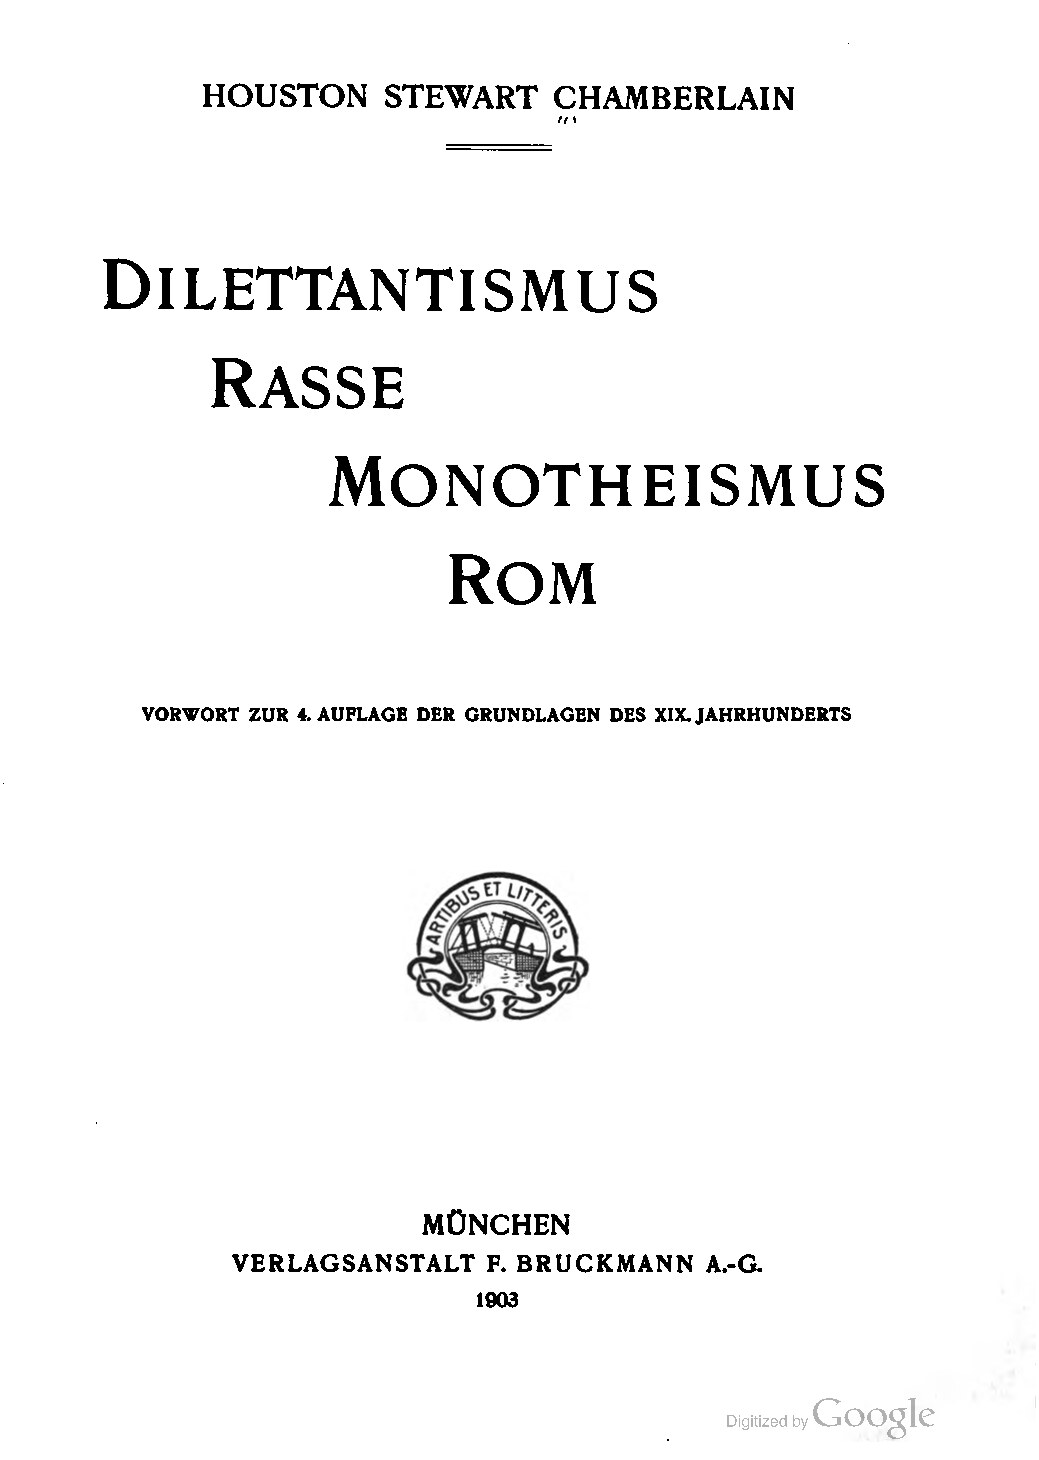 Dilettantismus, Rasse, Monotheismus, Rom